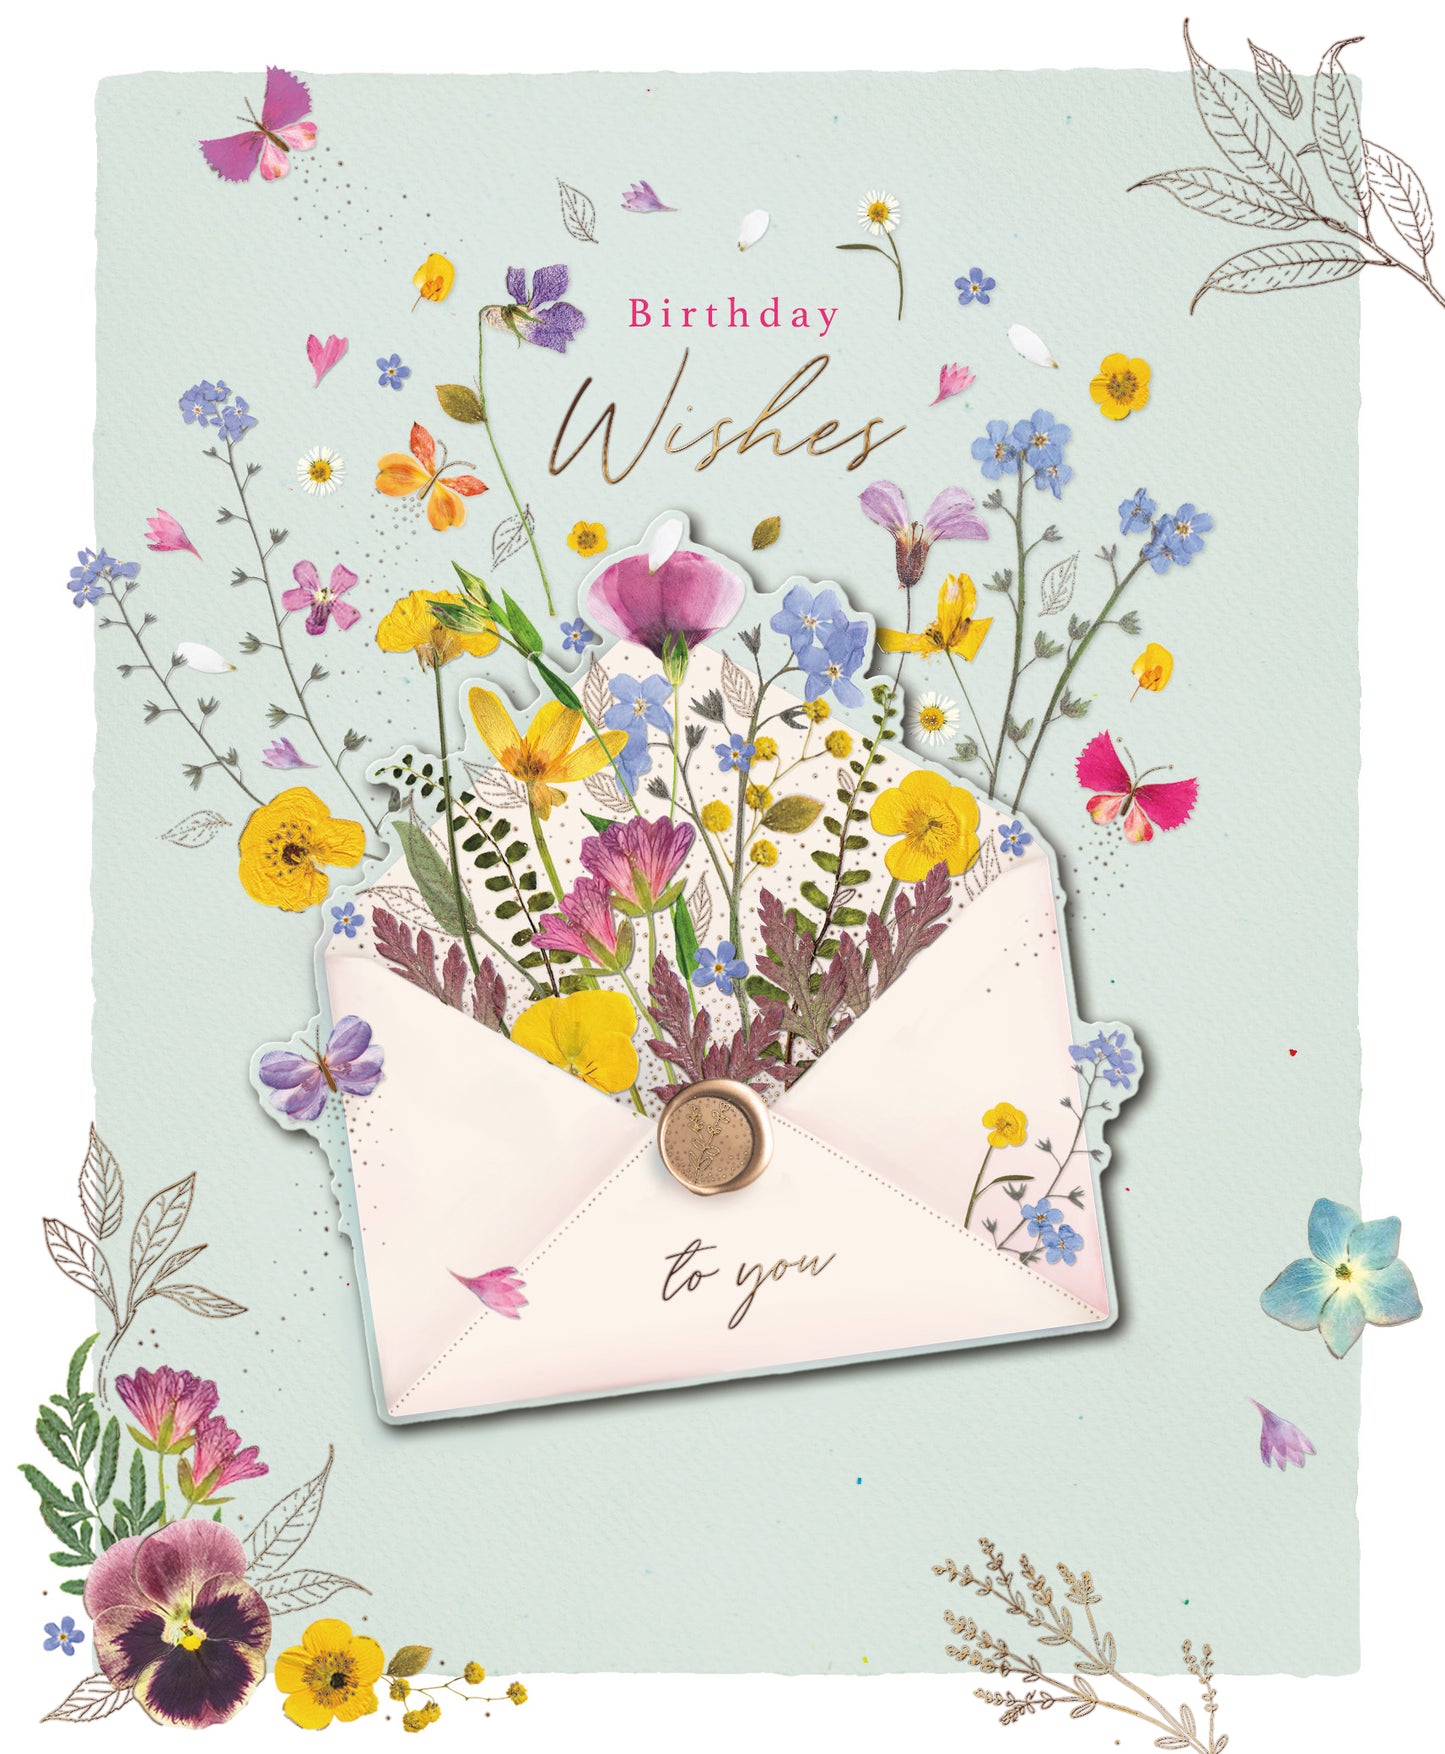 Birthday Wishes Wildflowers Embellished Birthday Greeting Card